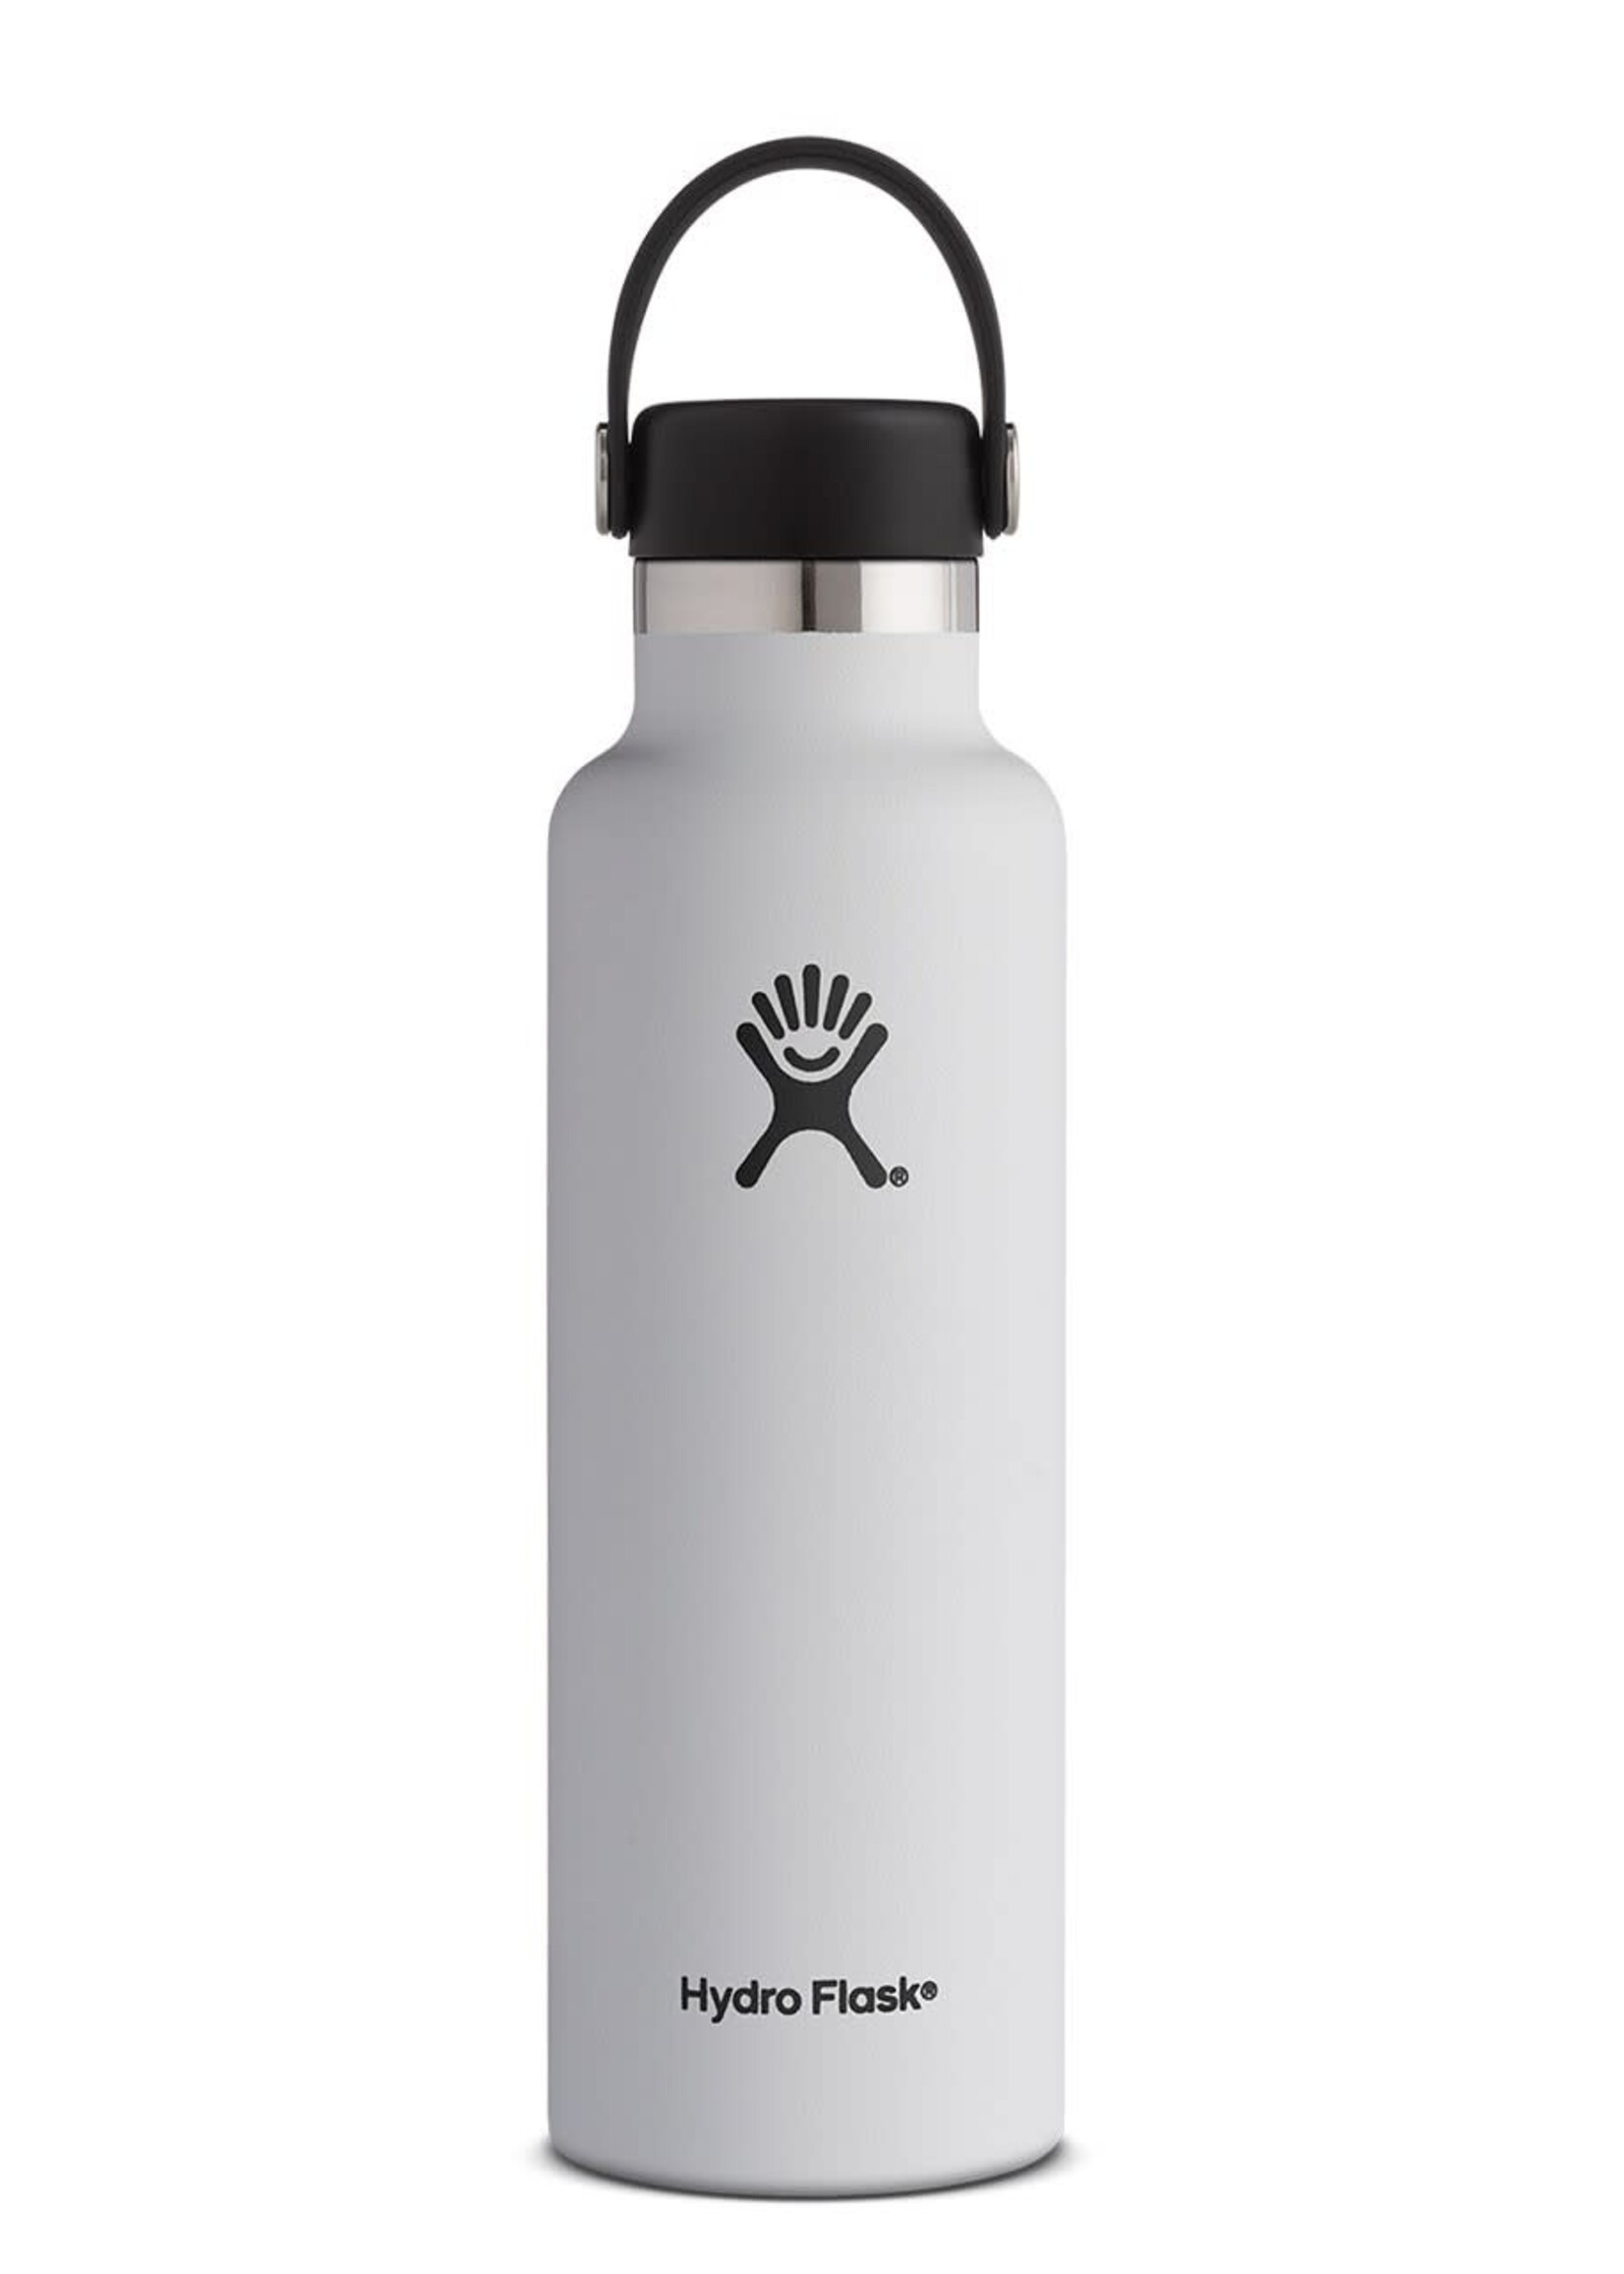 https://cdn.shoplightspeed.com/shops/645788/files/59993162/1652x2313x2/hydroflask-hydro-flask-21-oz-standard-mouth-water.jpg